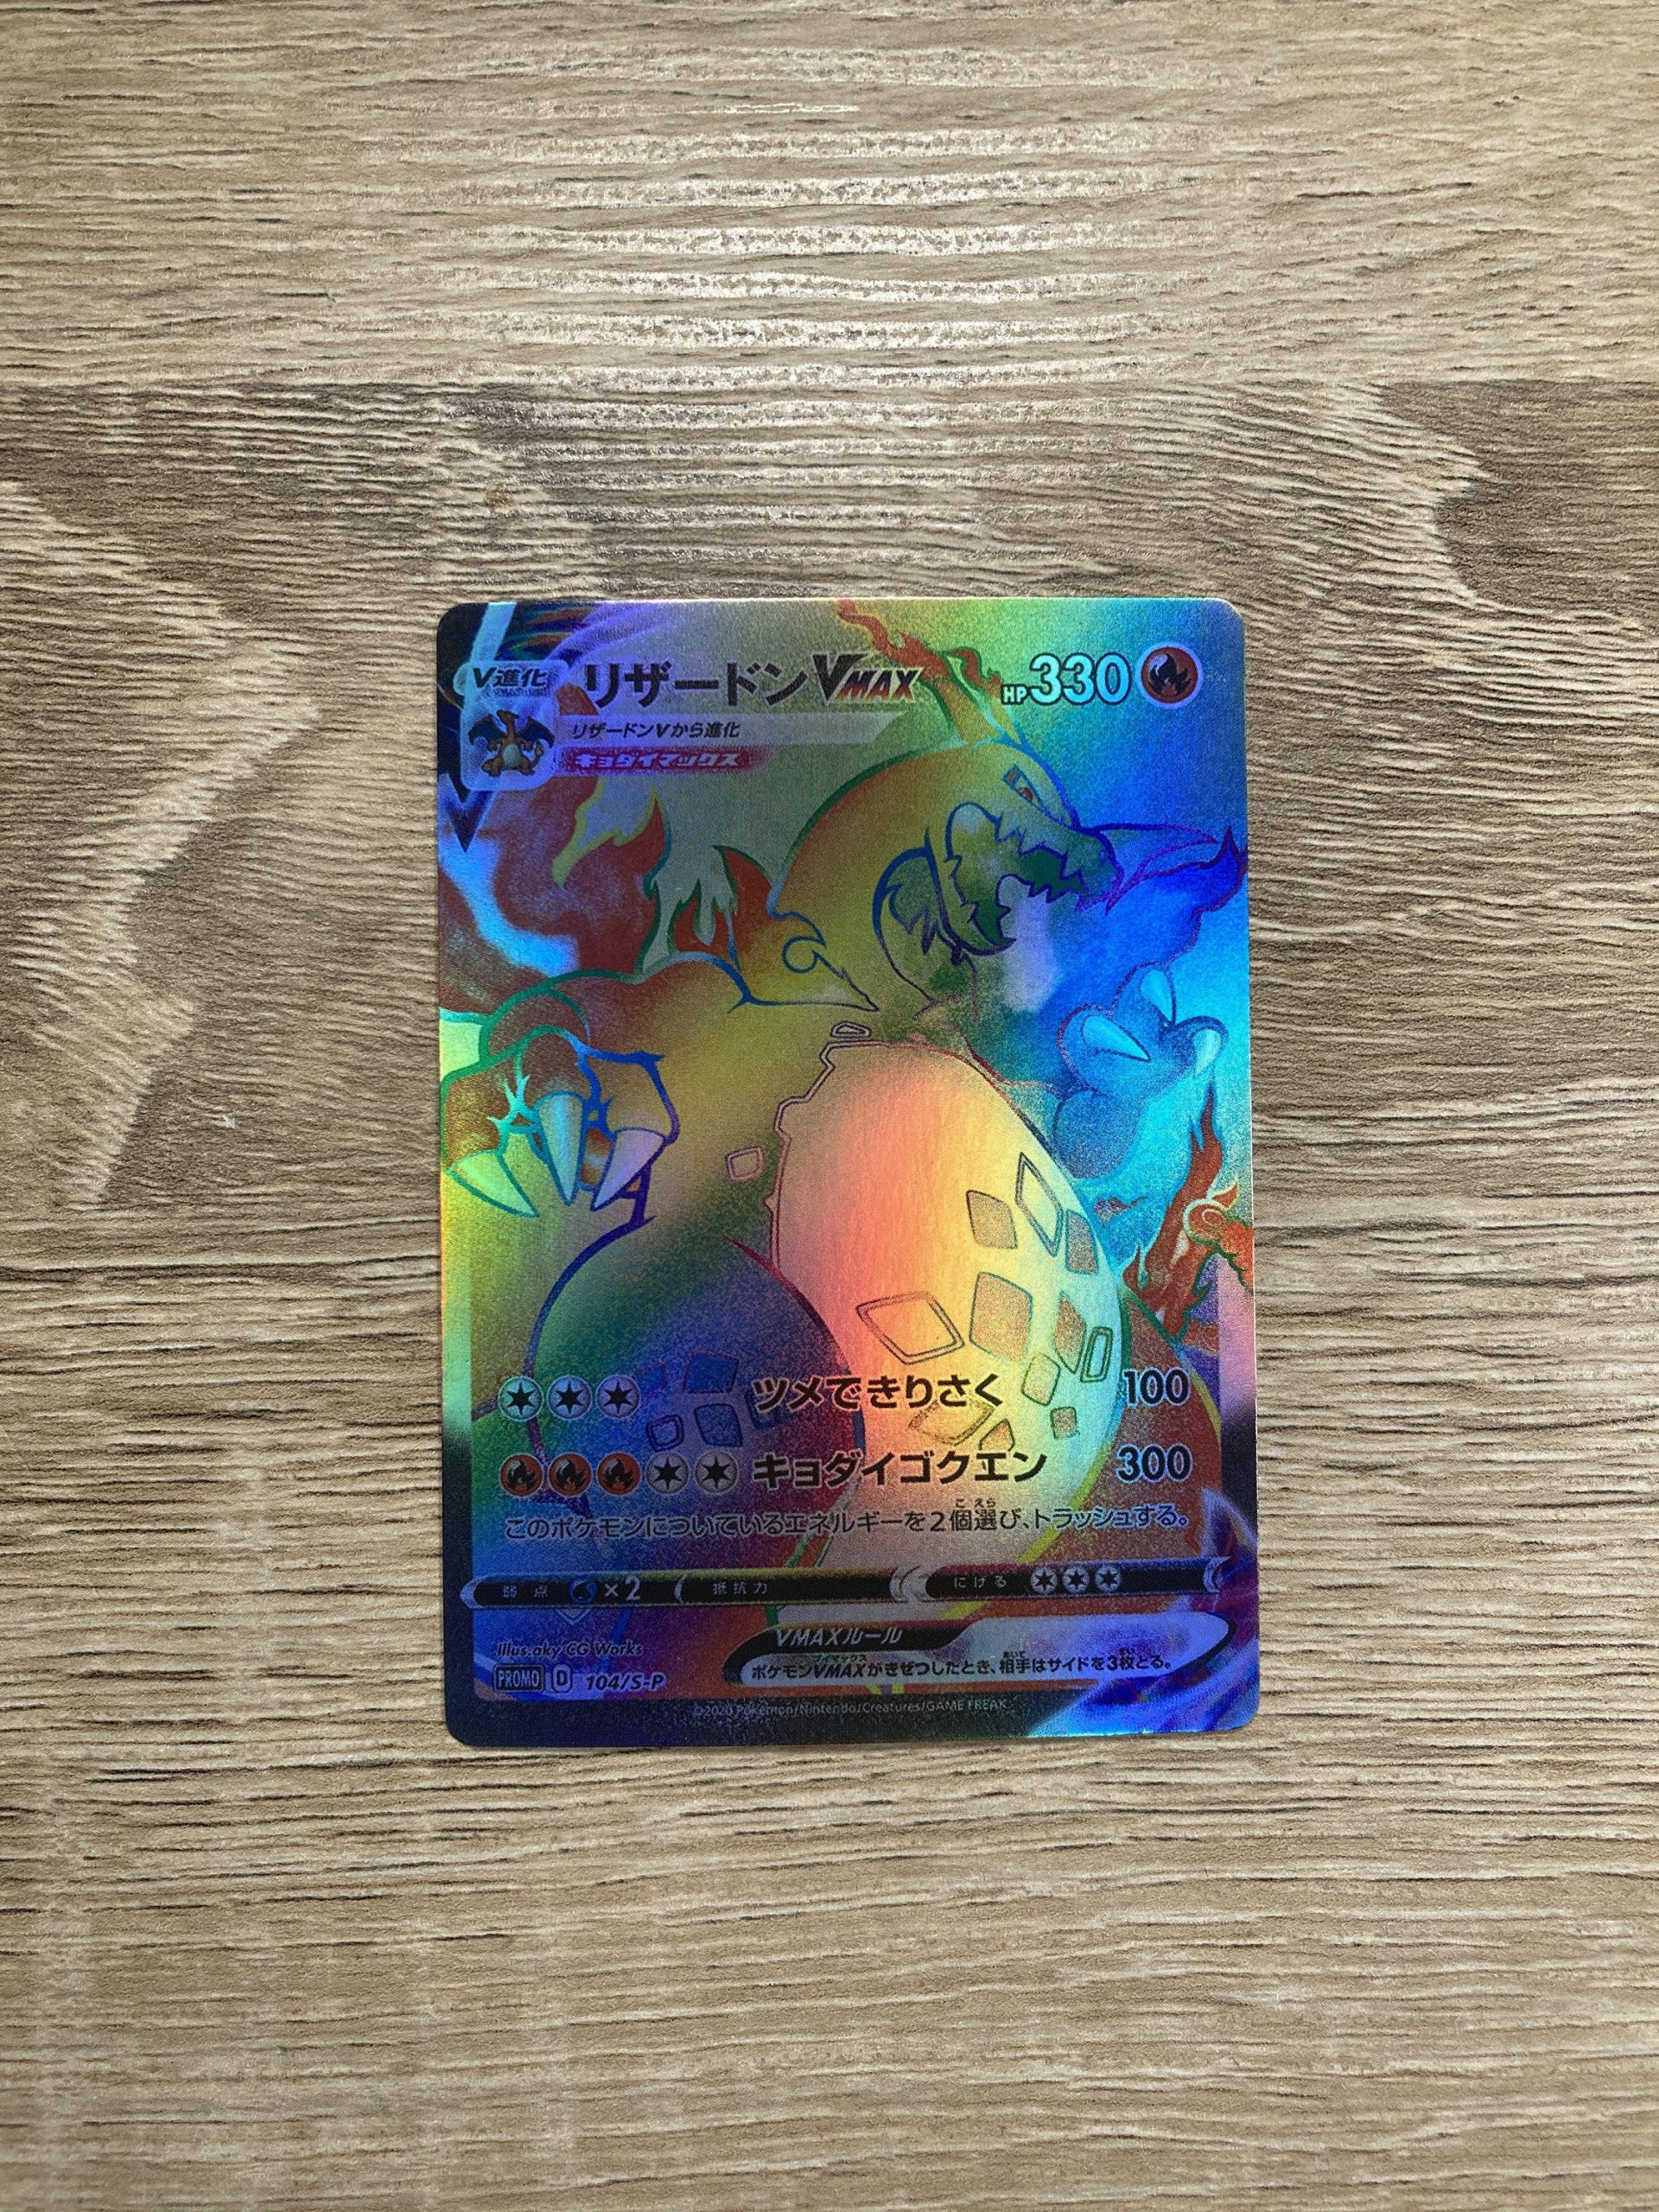 Custom Handmade PROXY Pokémon Cards! VMAX Charizard Rainbow Rare, Pikachu  Illustrator - Toys - Hamden, Connecticut, Facebook Marketplace